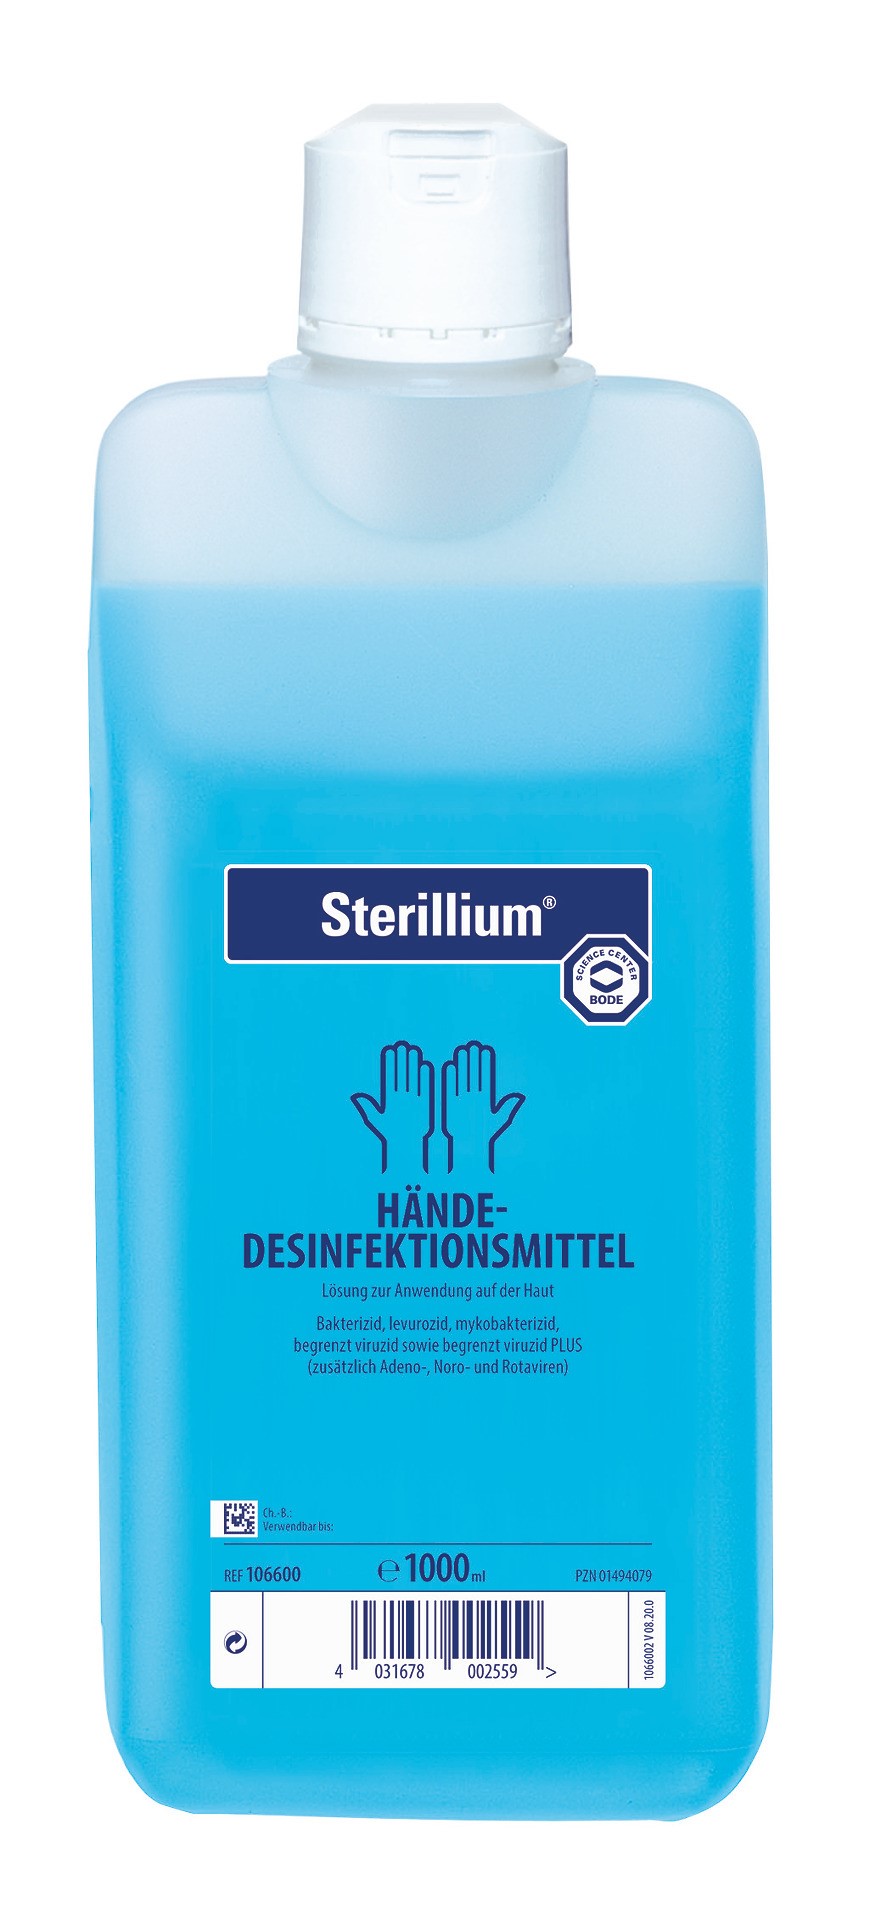 Produktbild: Hartmann Sterillium 10x1000ml (Karton)